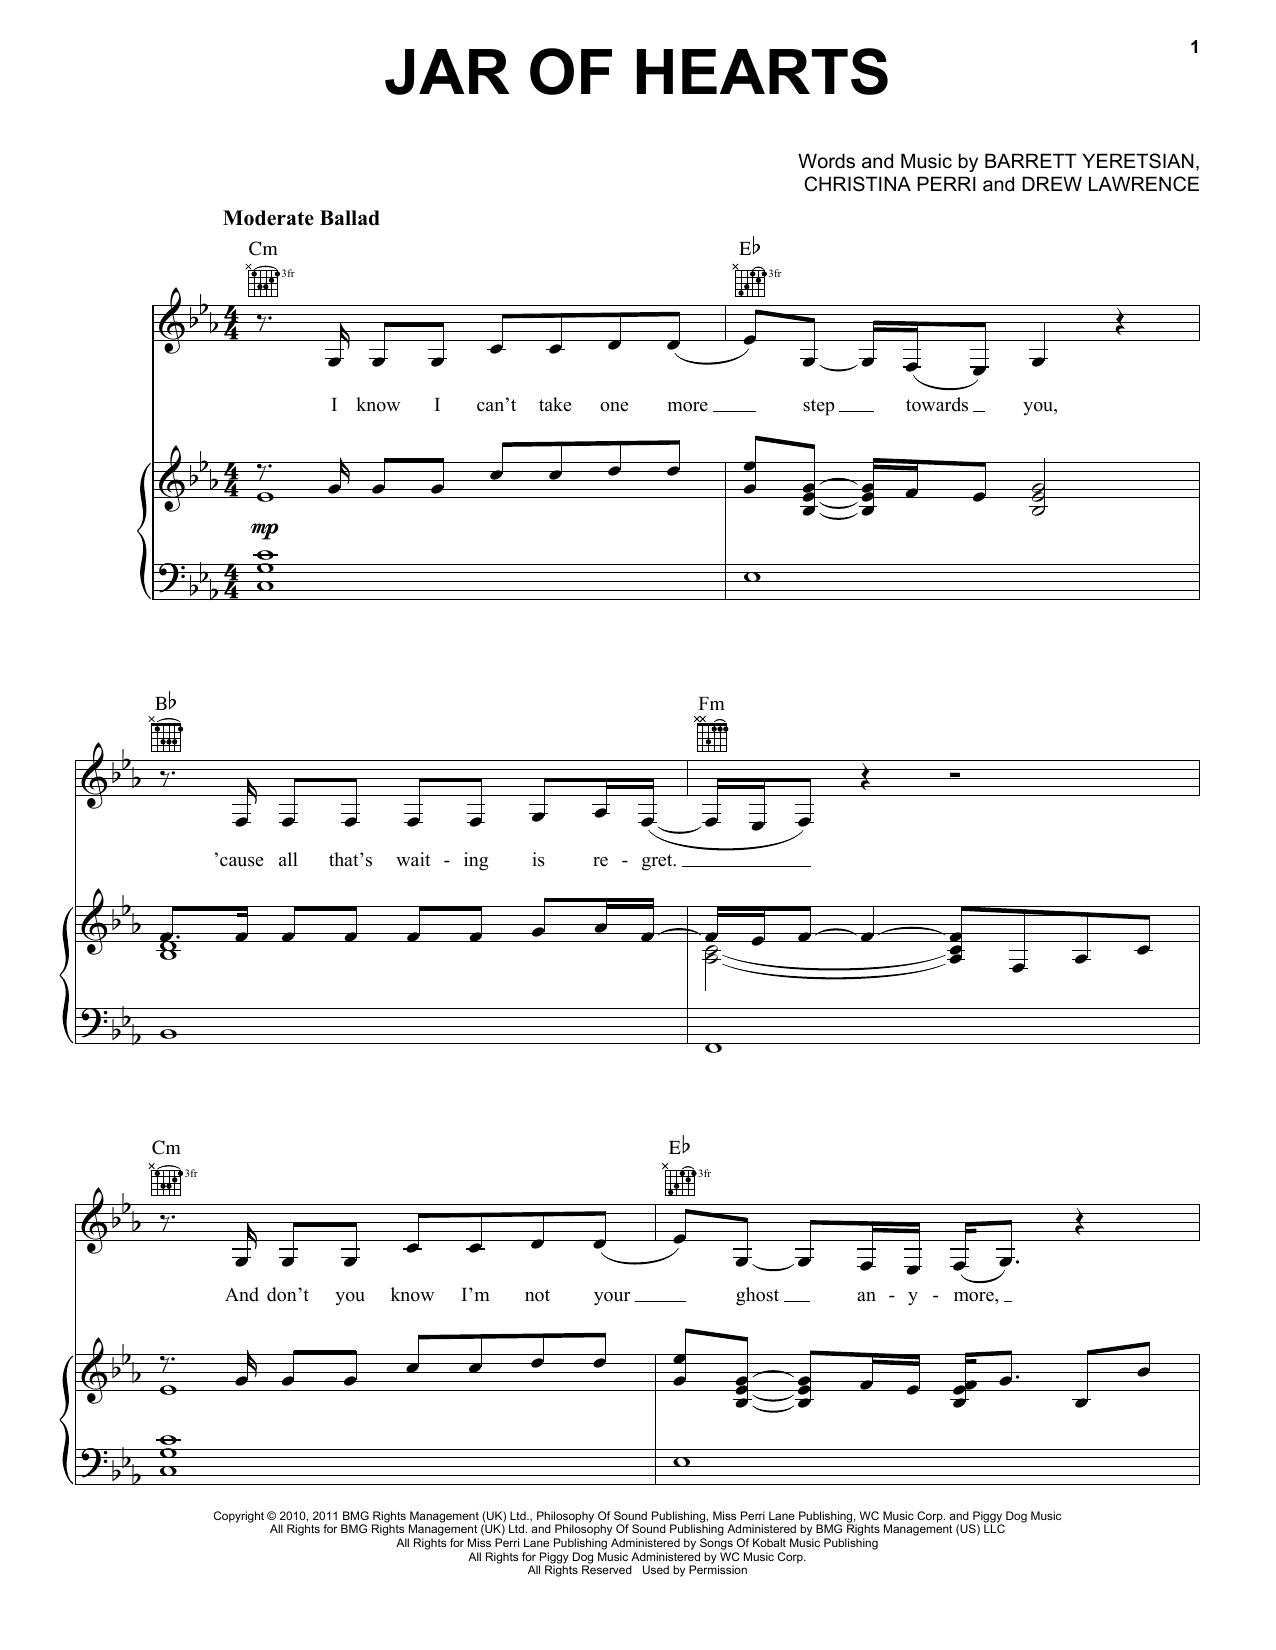 Christina Perri Jar Of Hearts Sheet Music Notes & Chords for Clarinet - Download or Print PDF